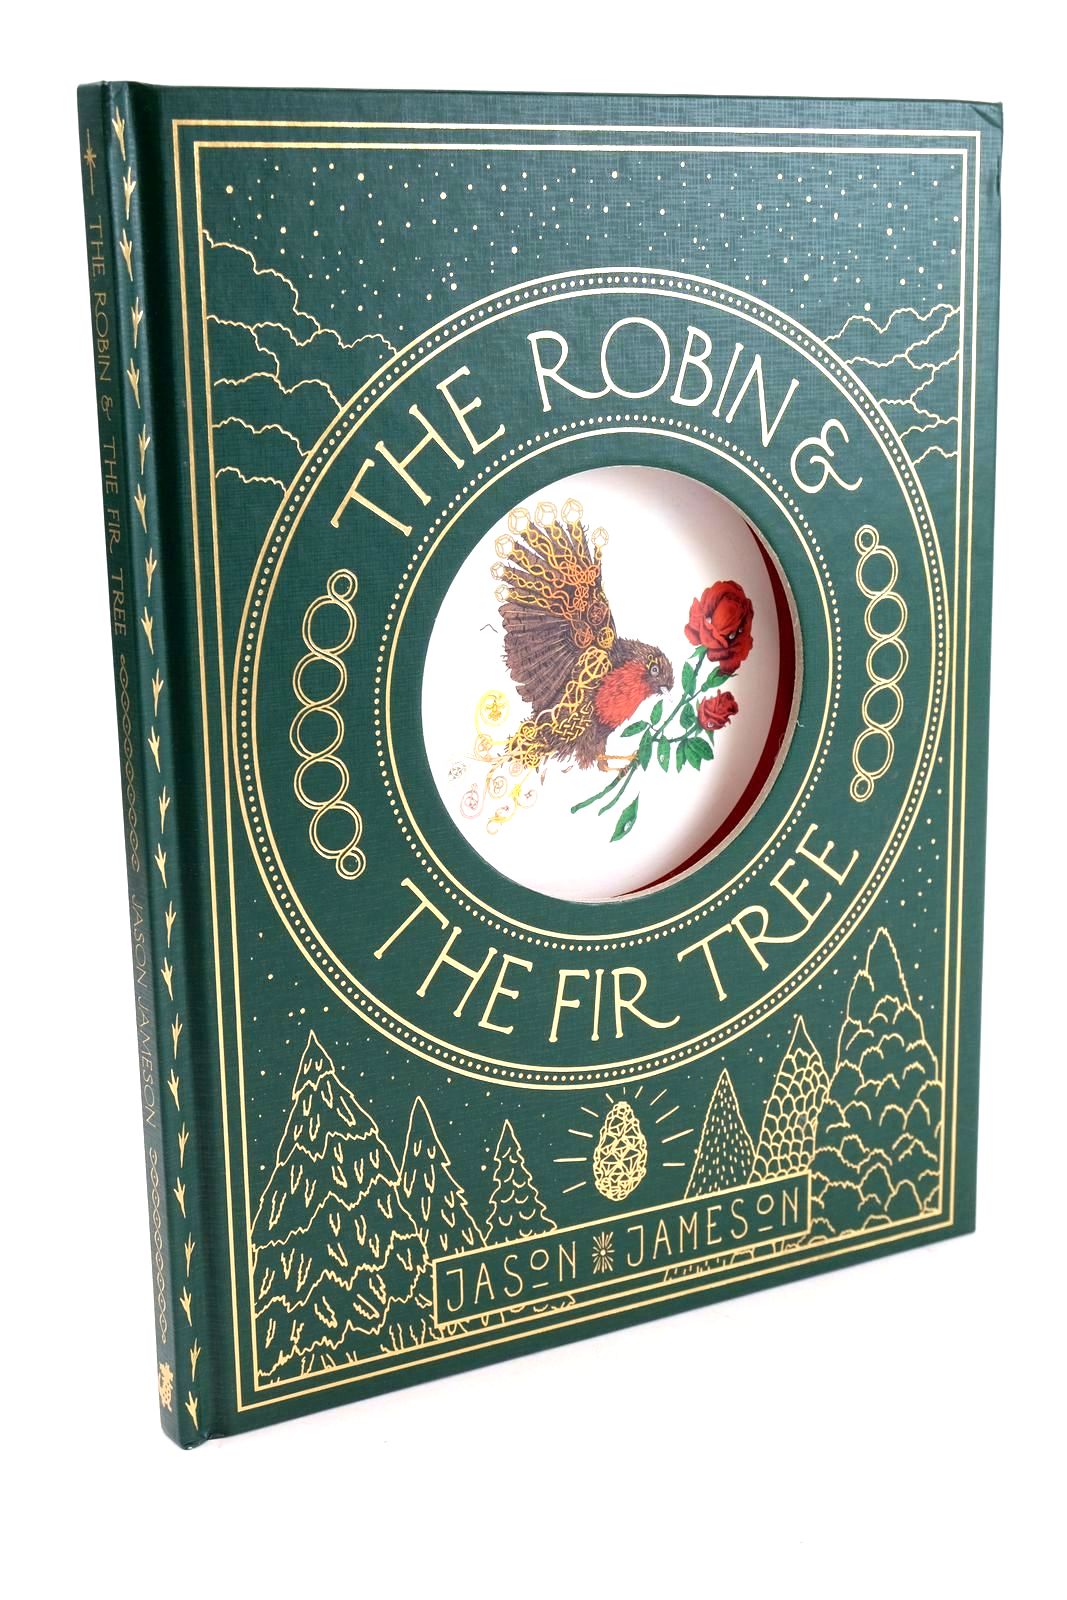 The Robin & The Fir Tree